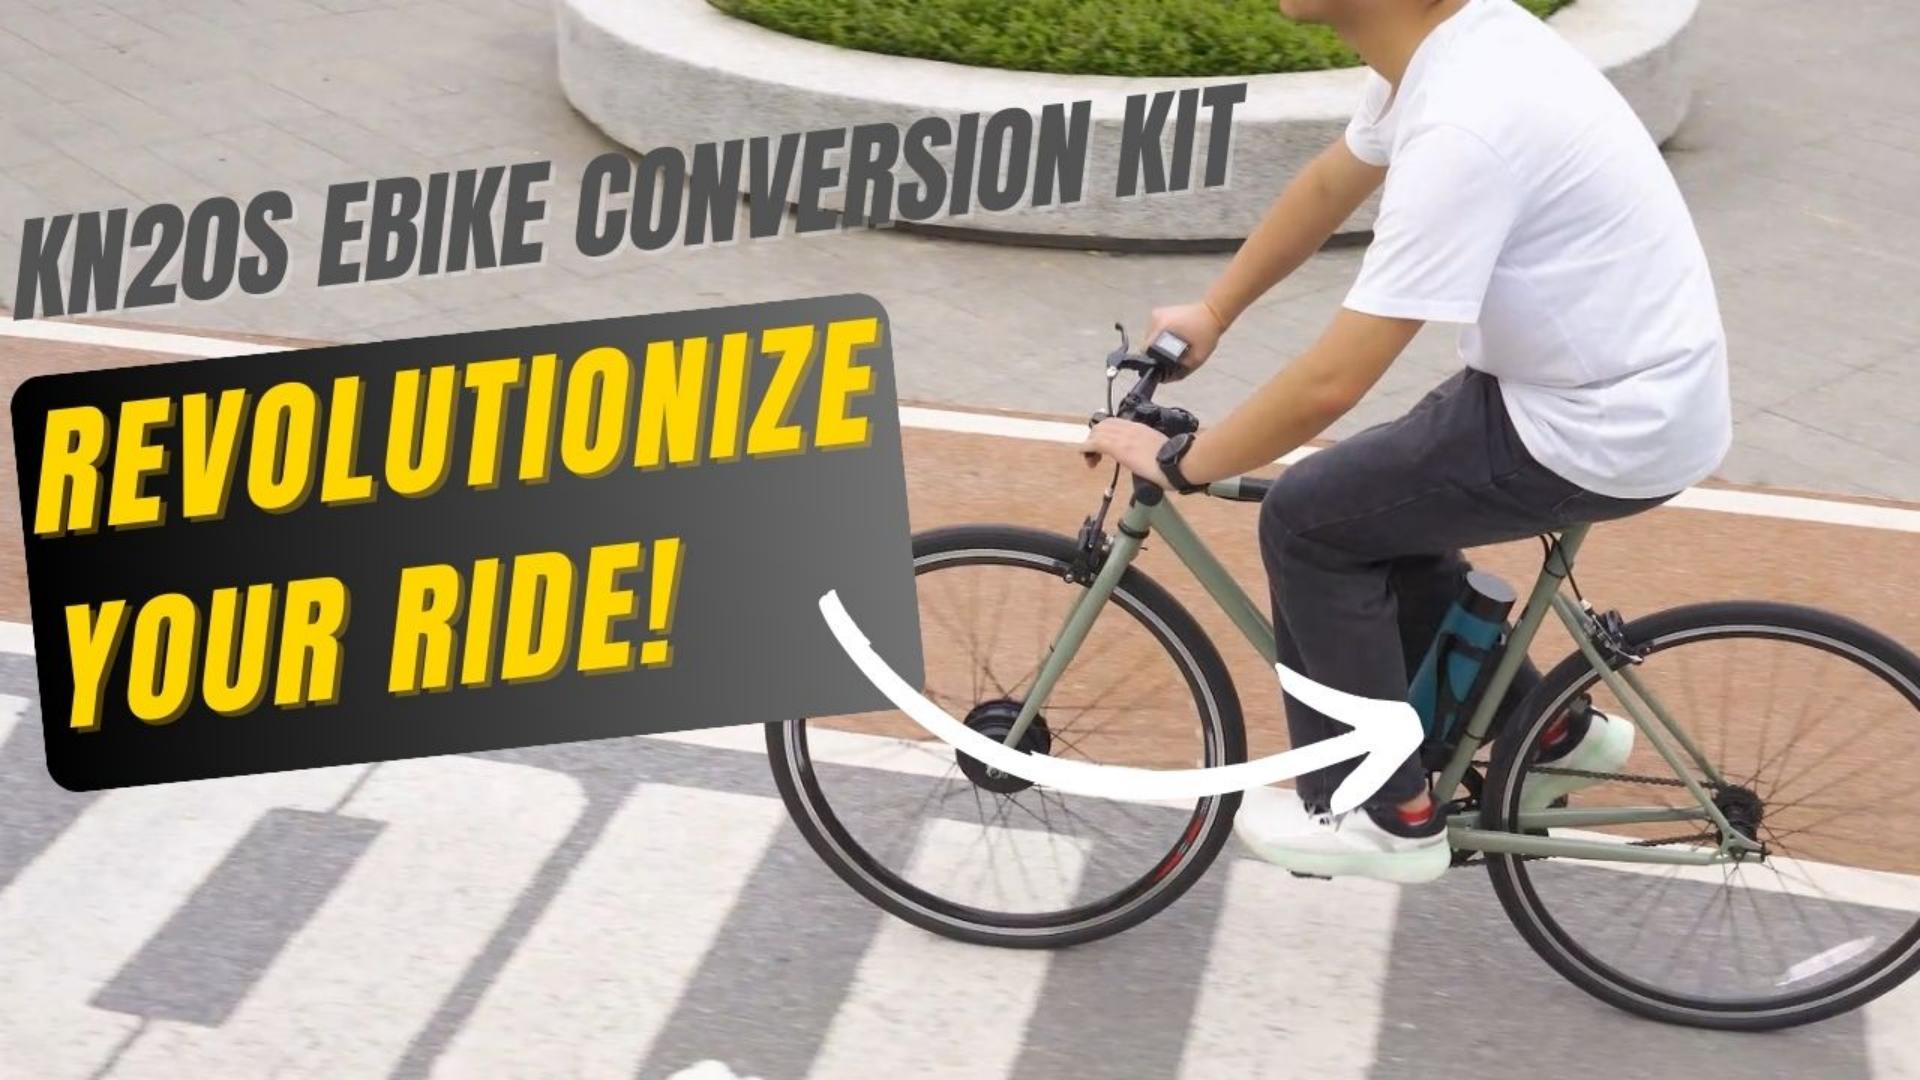 KN20S Ebike Conversion kit/Revolutionize Your Ride!